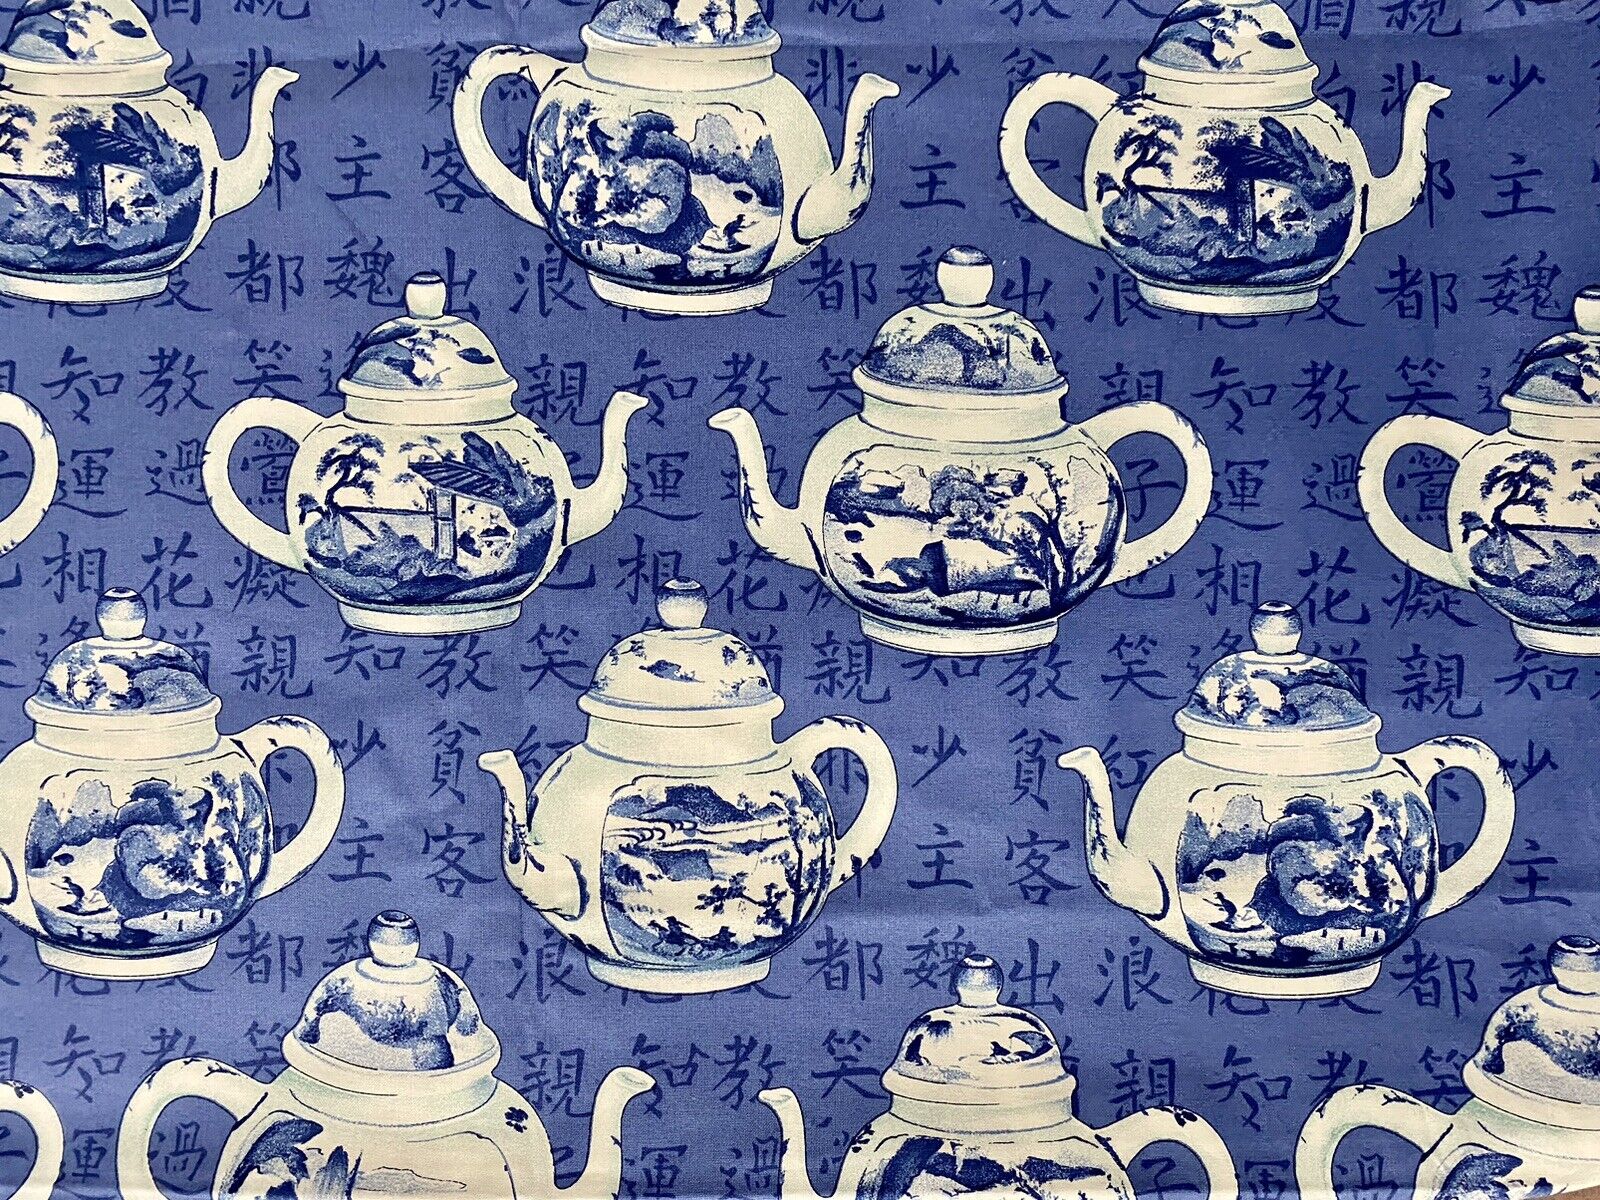 Gaston Y Daniela Estampado a mano Fabric “Vung Tau” Blue Tea Pots 3yds x 63